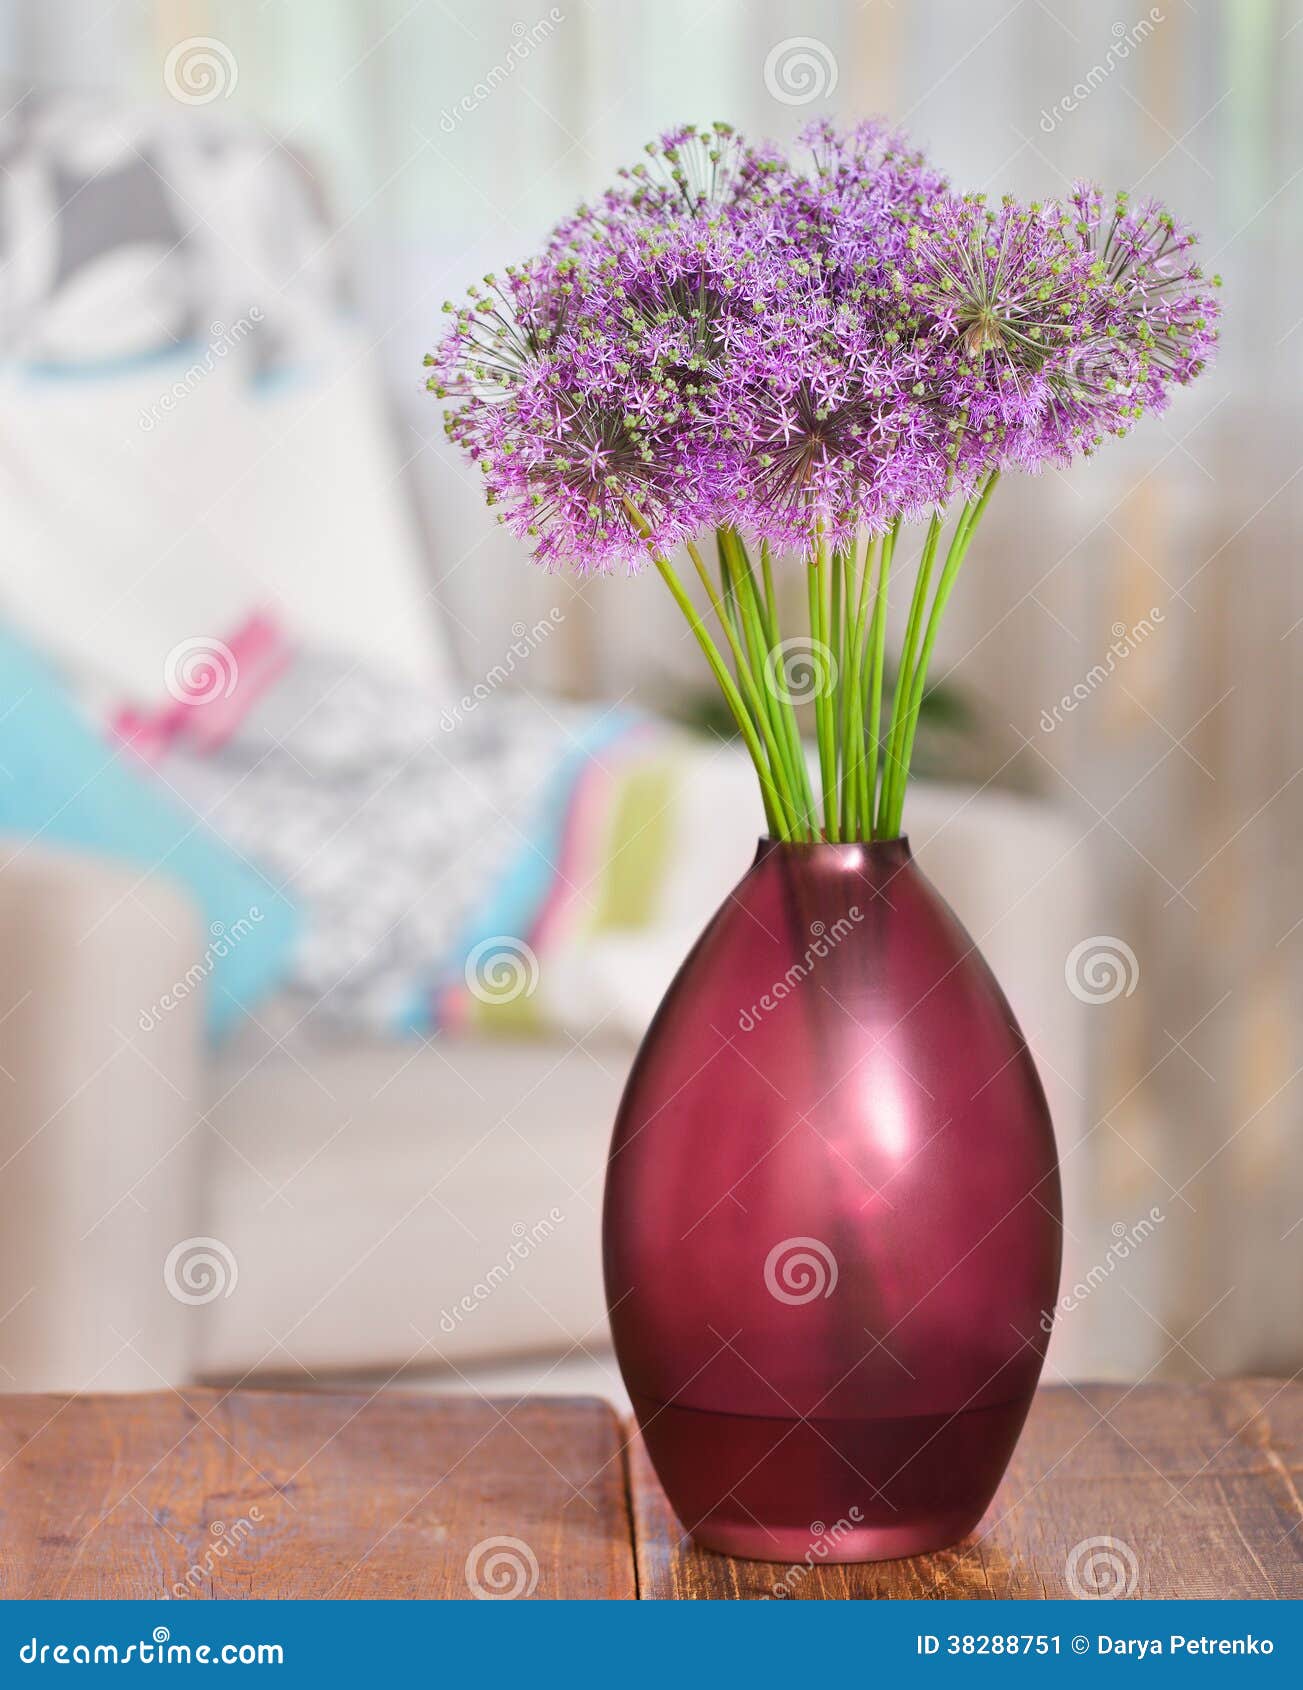 giant onion (allium giganteum) flowers in the flower vase on tab